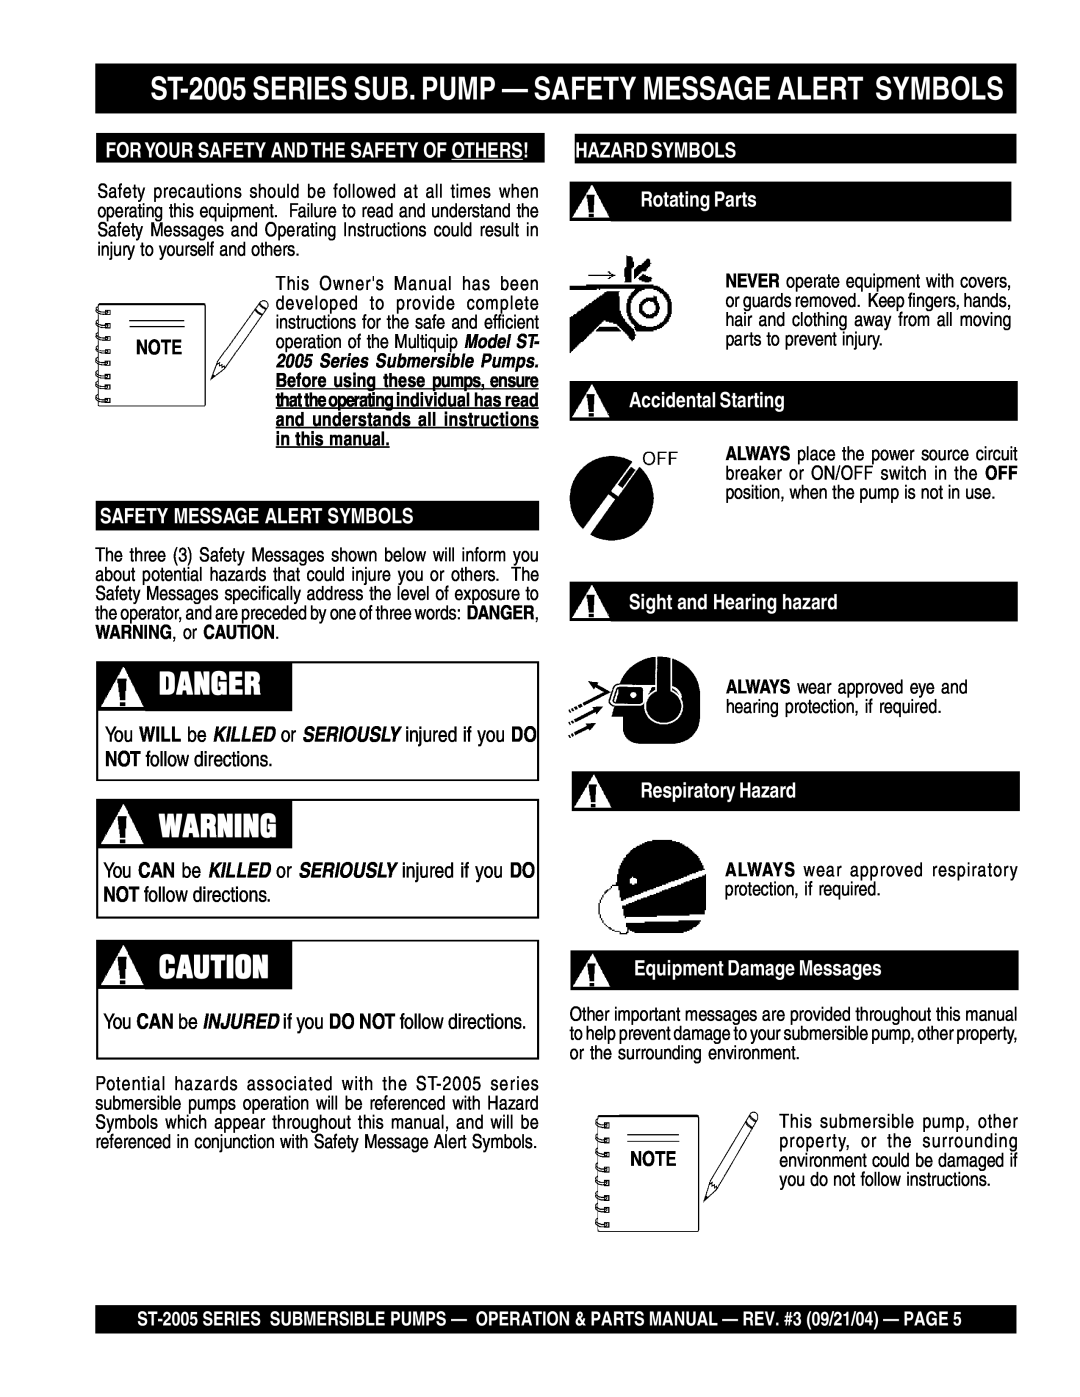 Multiquip manual Danger, ST-2005 SERIES SUB. PUMP - SAFETY MESSAGE ALERT SYMBOLS, Safety Message Alert Symbols 